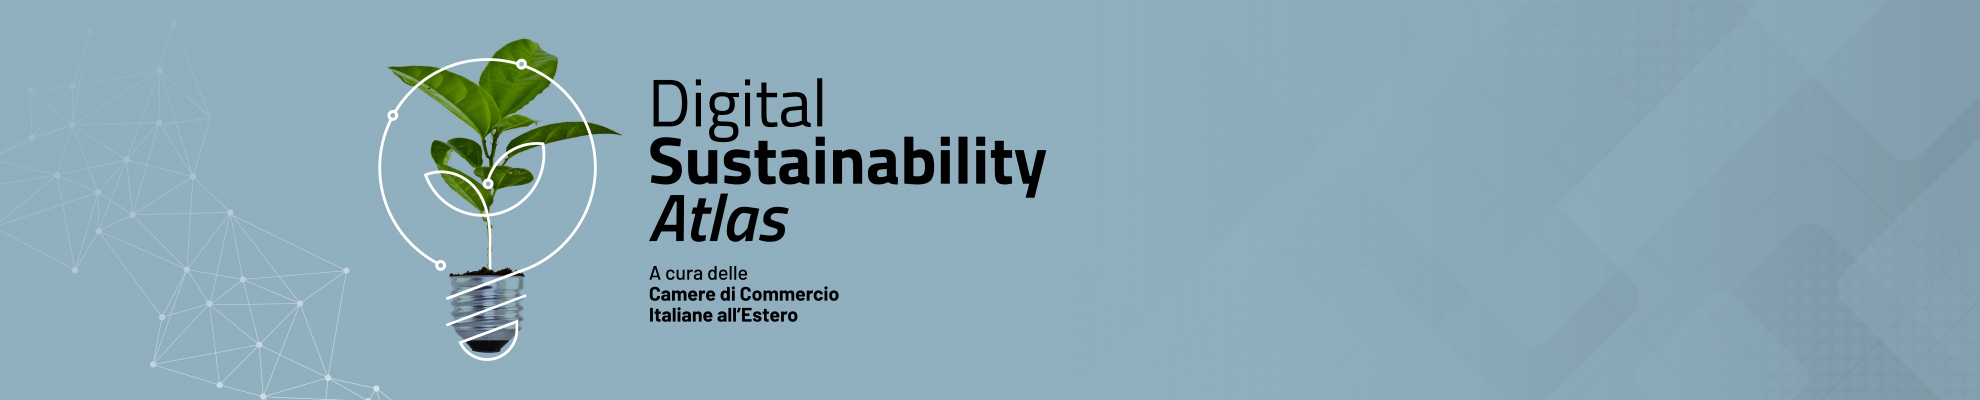 Digital Sustainability Atlas